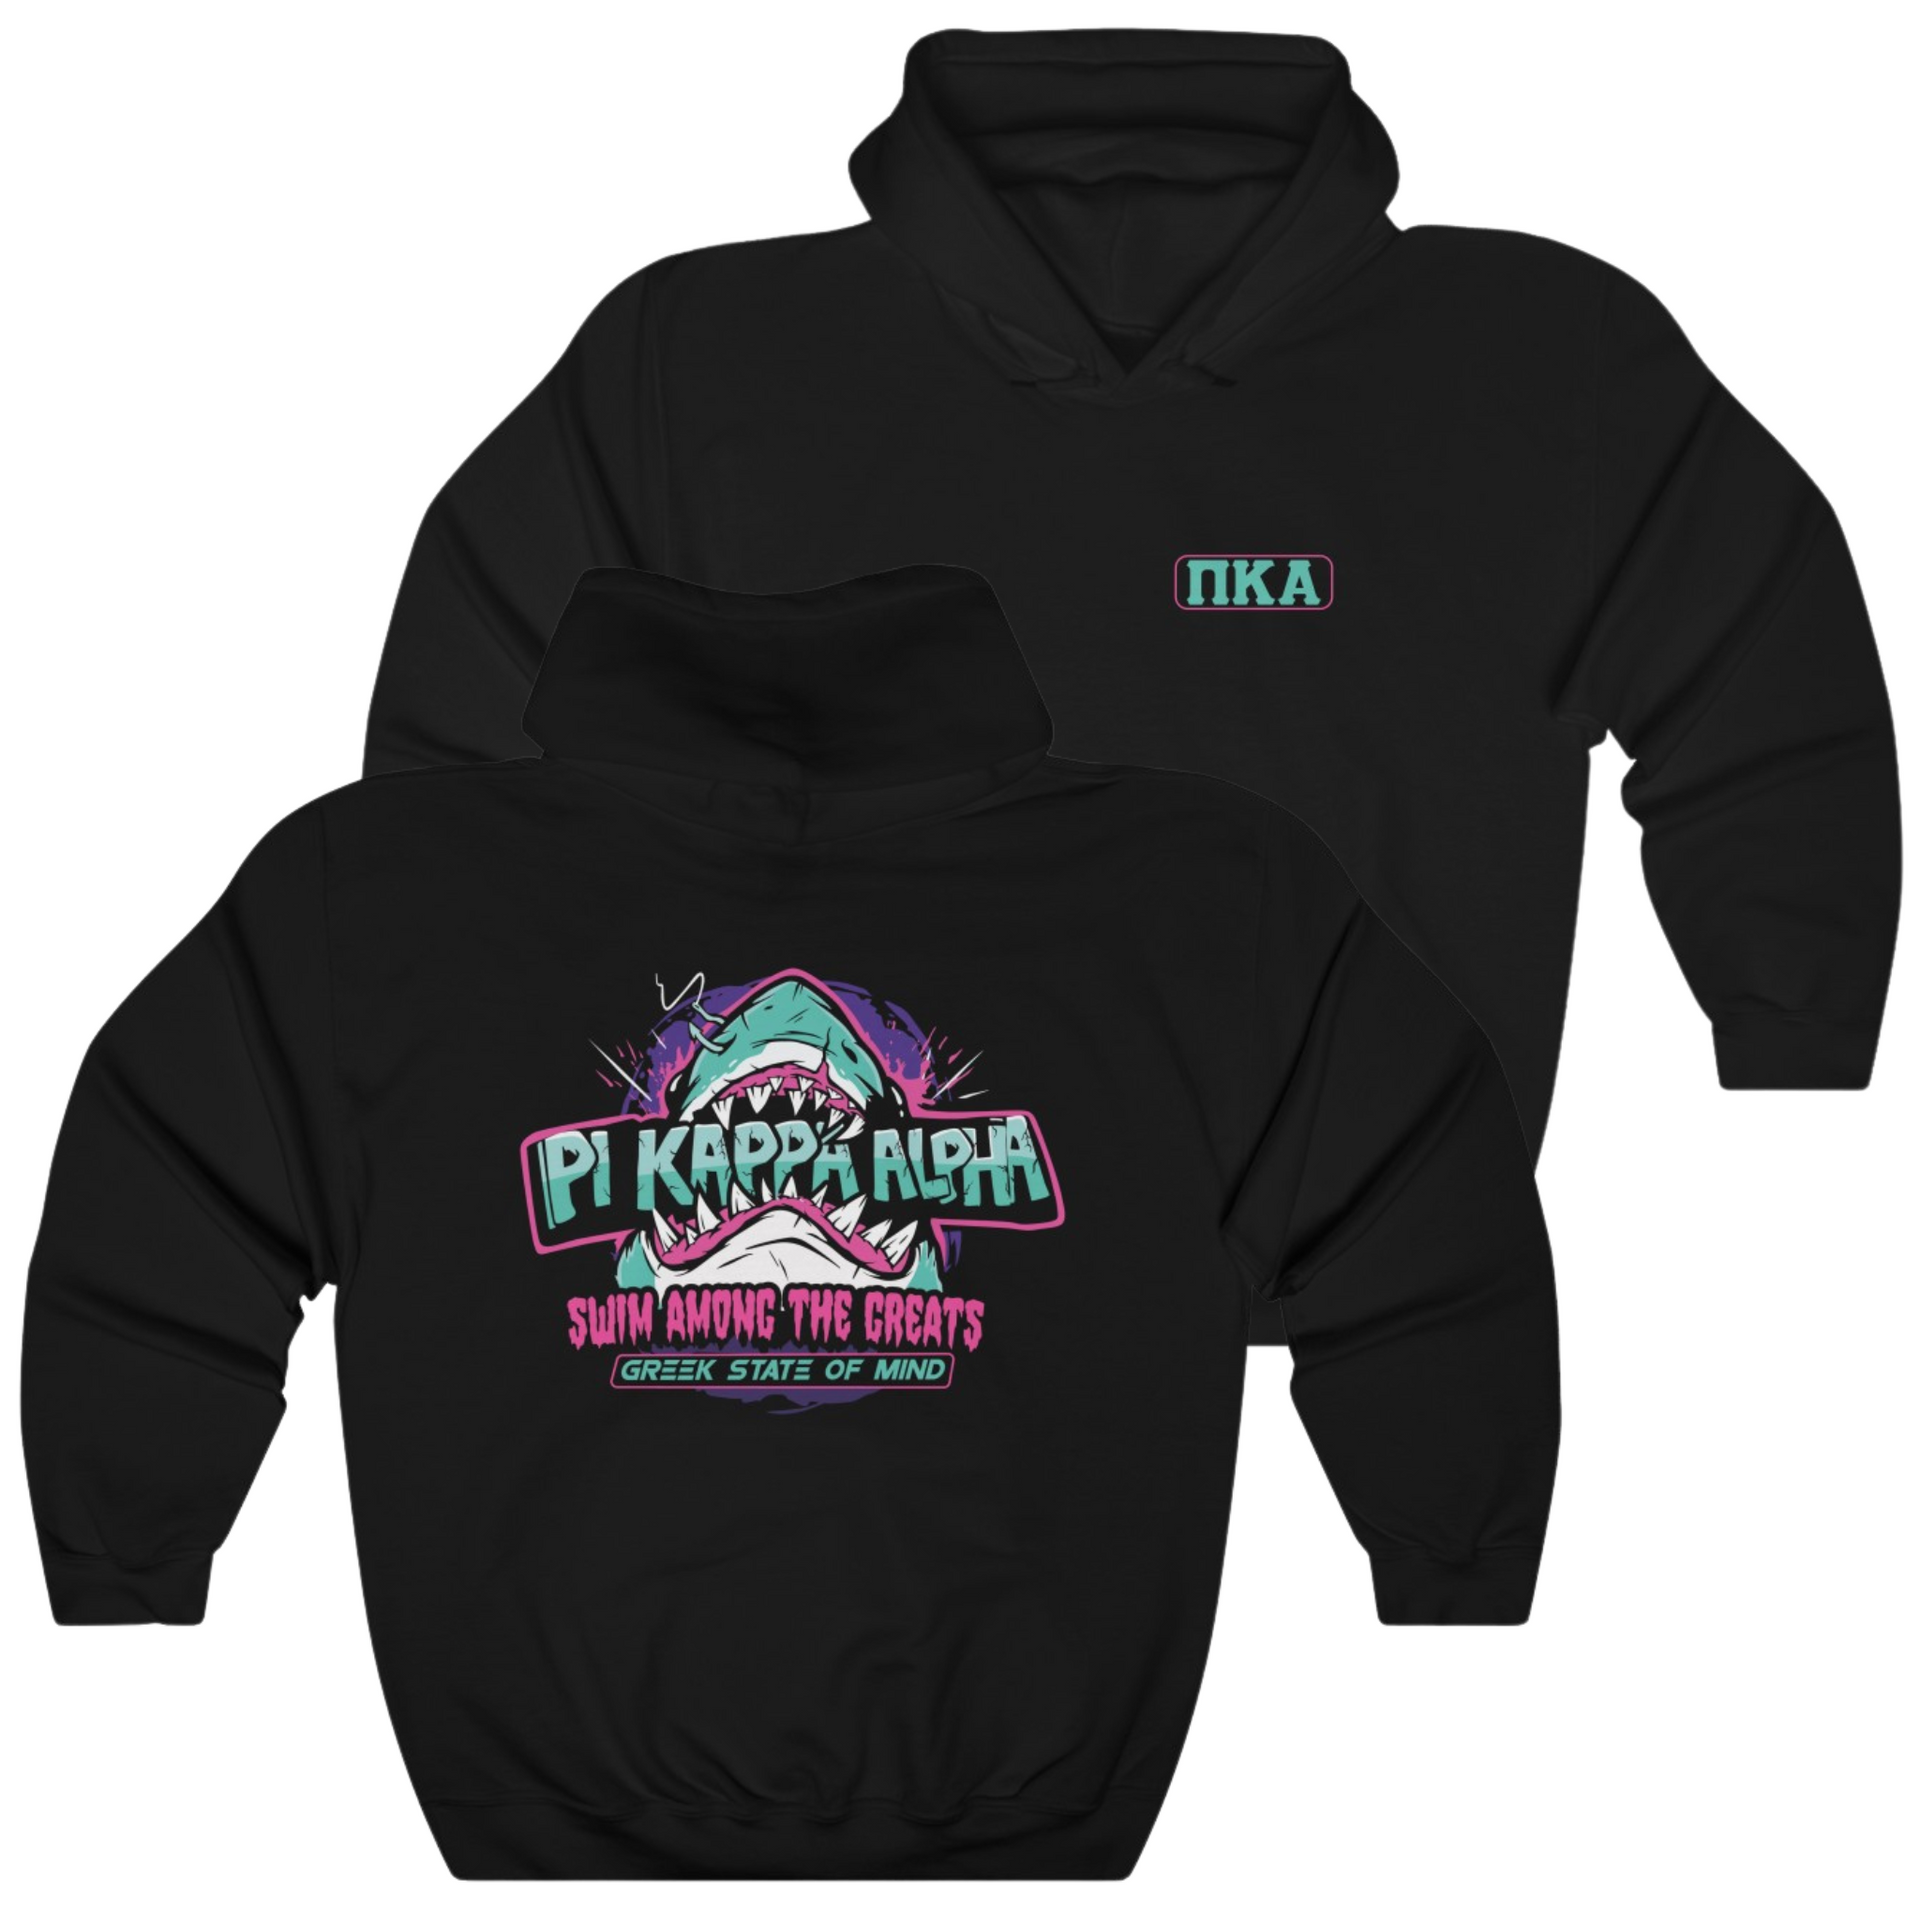 Black Pi Kappa Alpha Graphic Hoodie | The Deep End | Pi kappa alpha fraternity shirt 